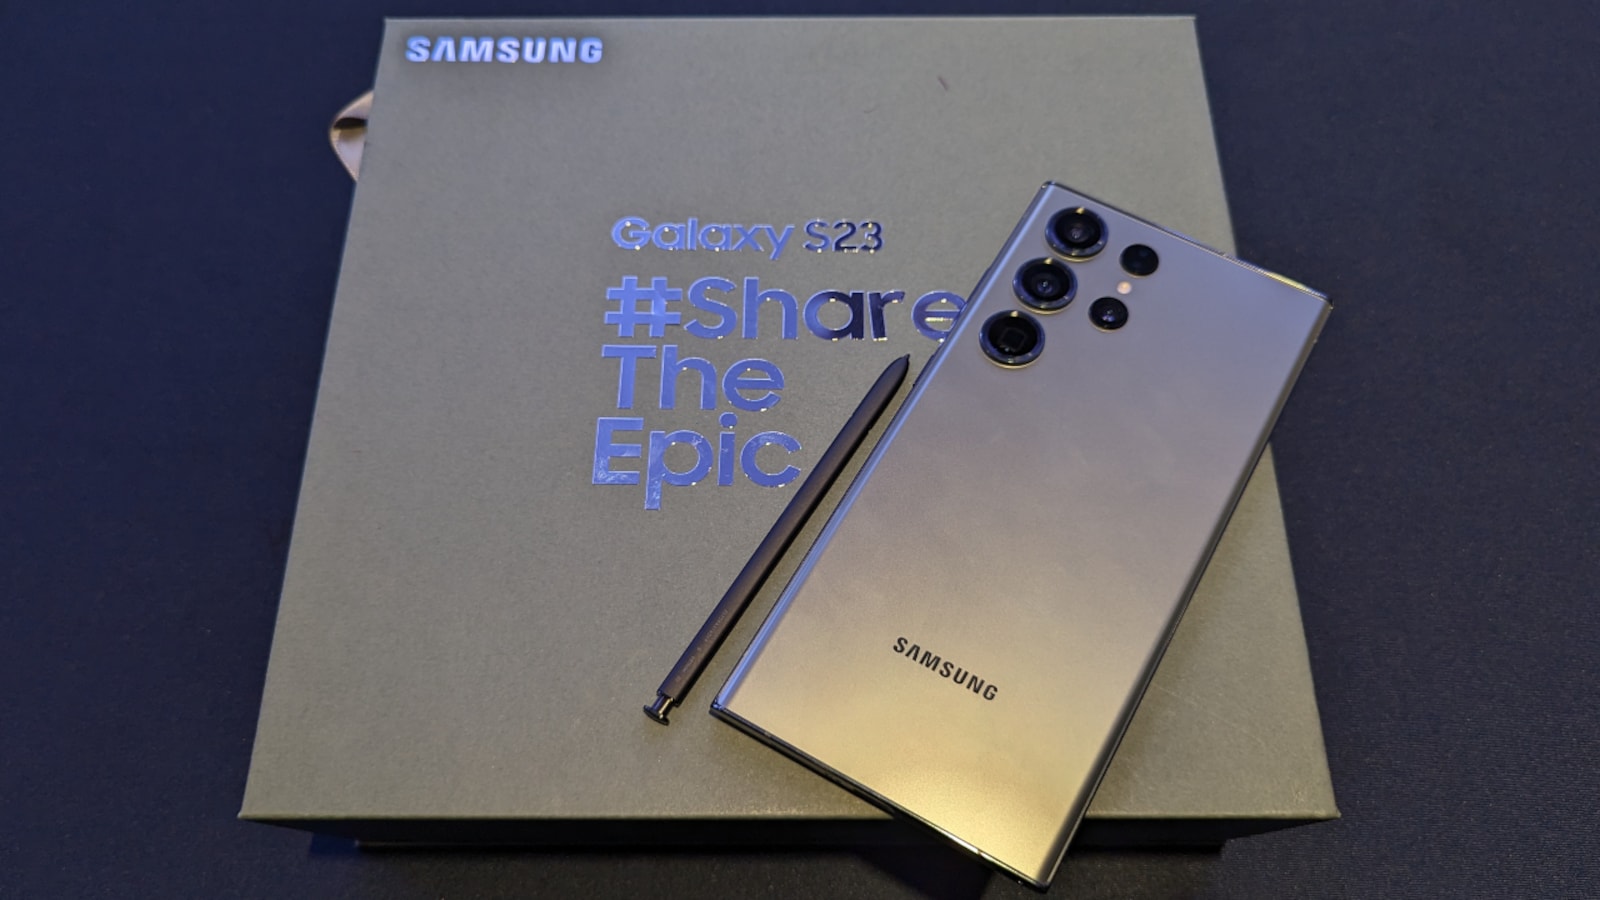 Samsung Galaxy S23 Ultra lançado: Confira características, preço e outros detalhes